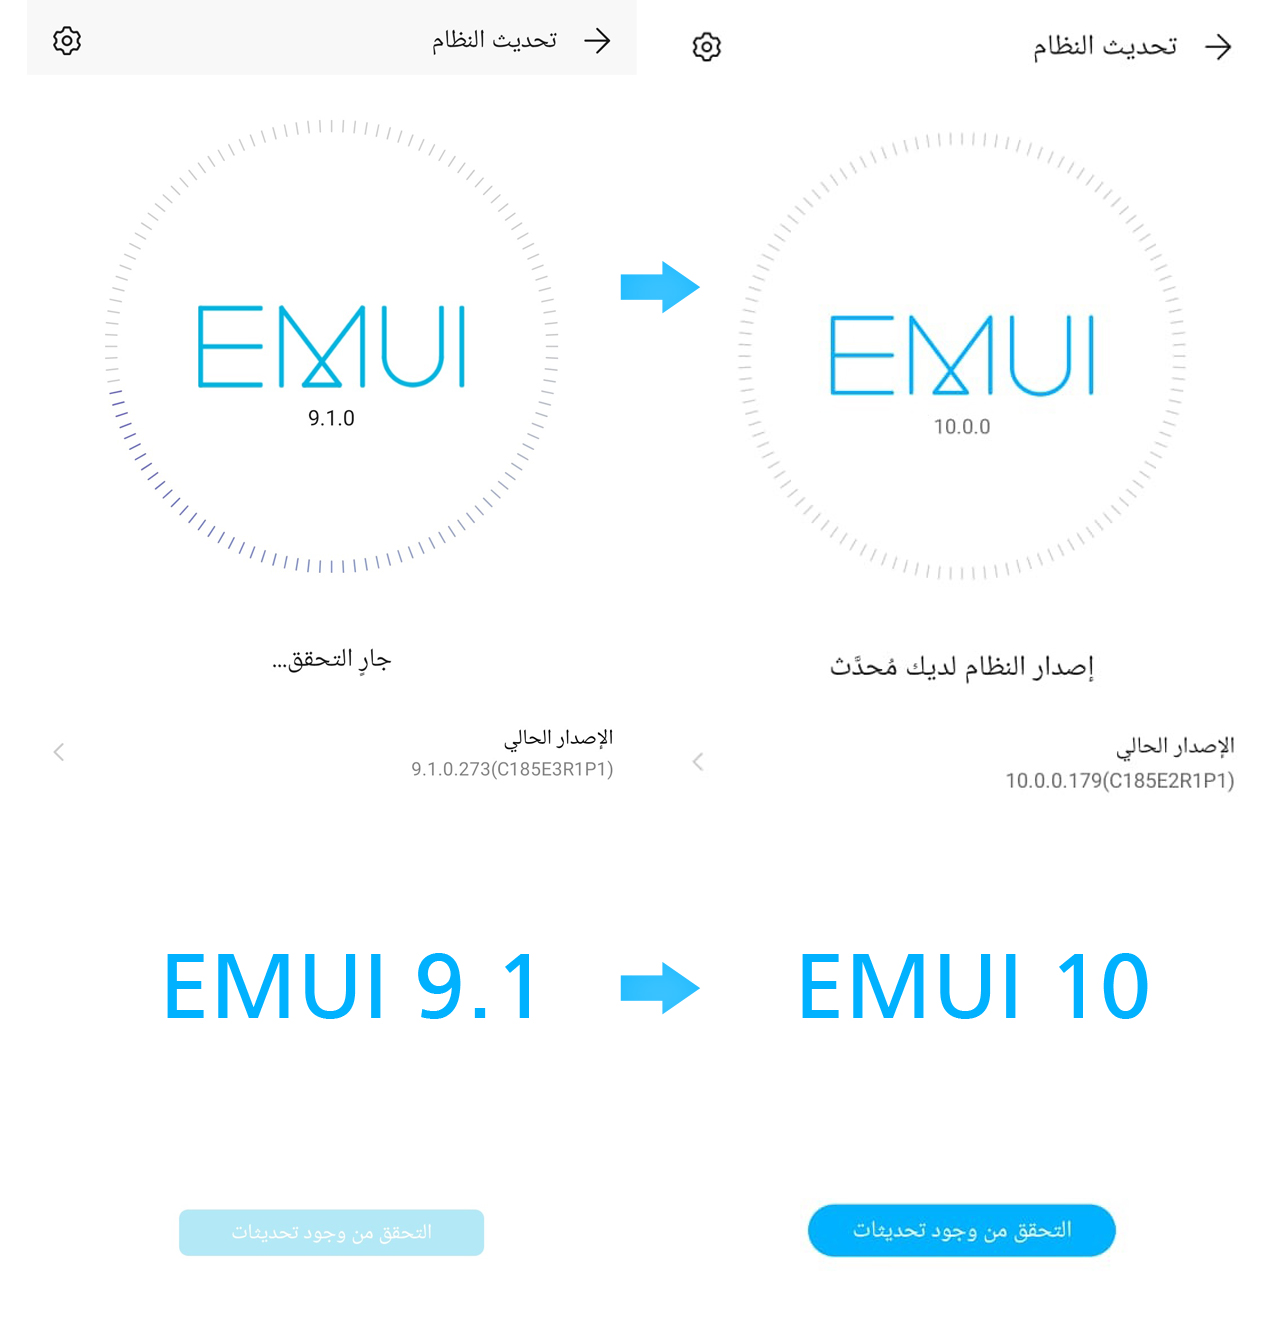 EMUIتثبيت-تحديث-هاتف-Honor-8X-الي-احدث-إصدار-EMUI-10